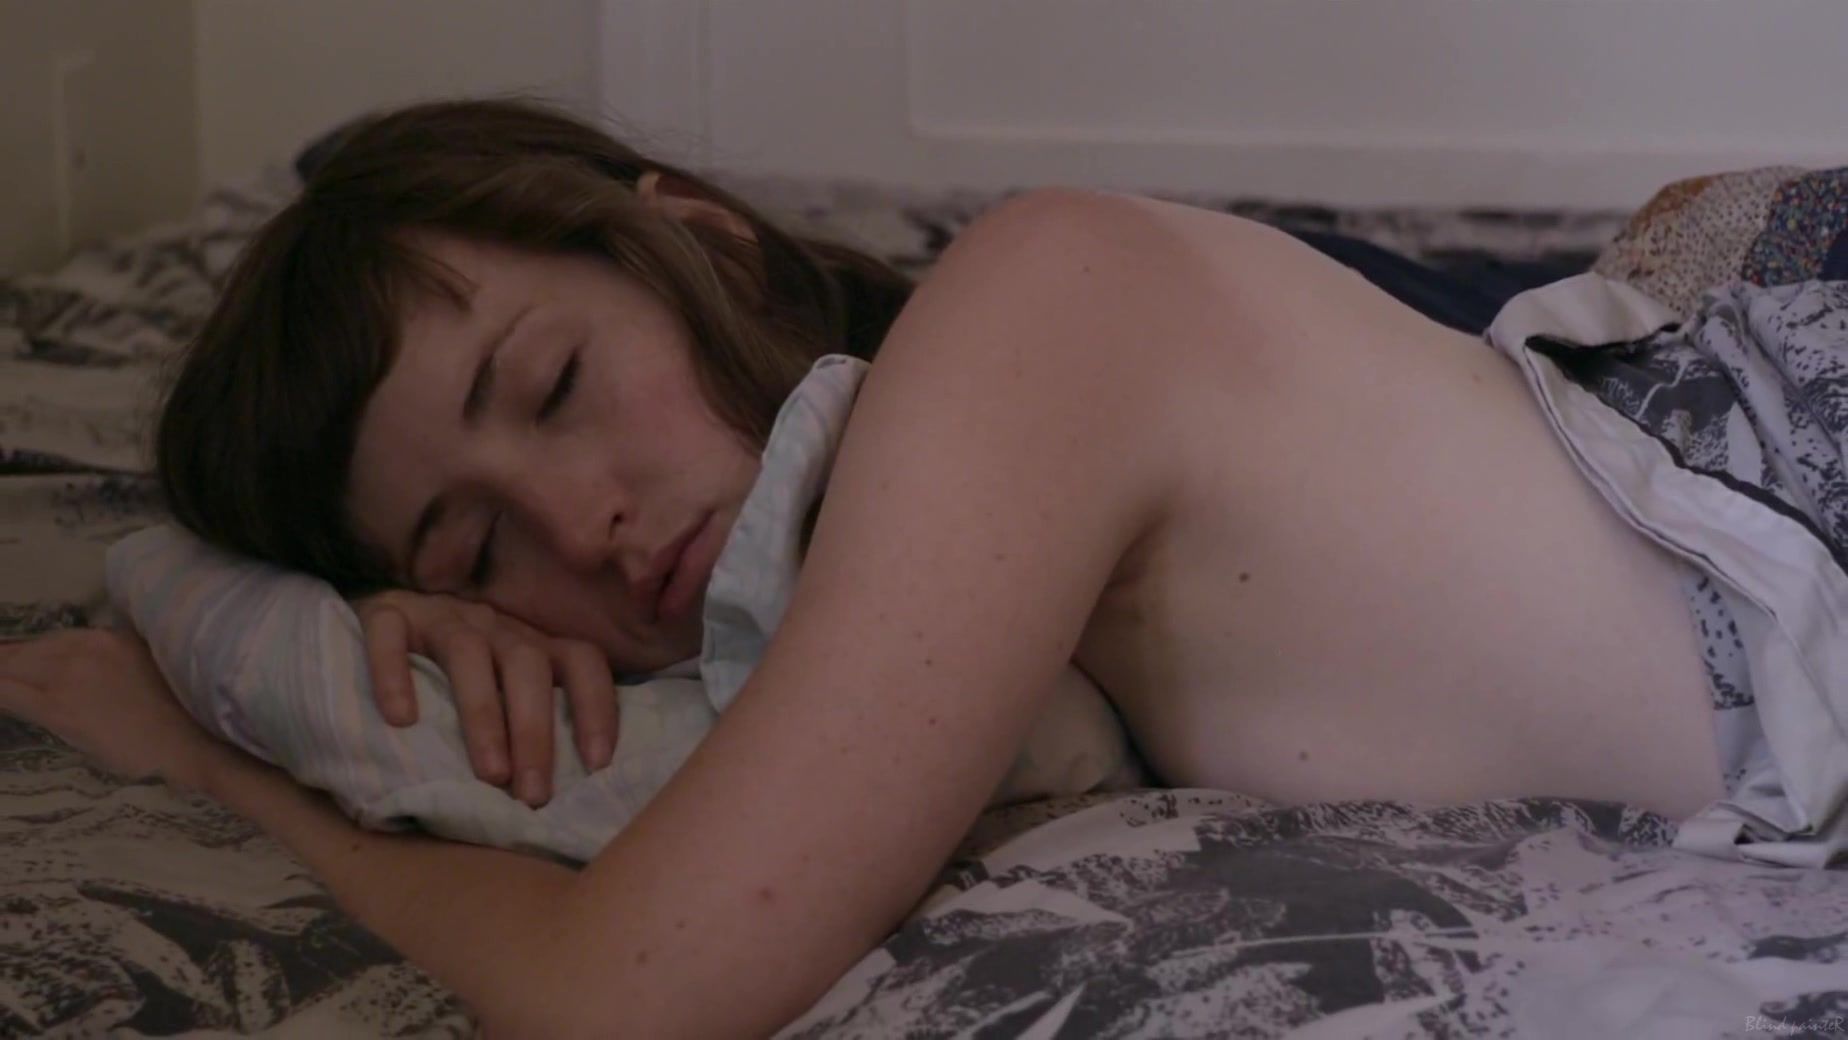 Cousin Kate Lyn Sheil nude scene - A Wonderful Cloud (2015) Transsexual